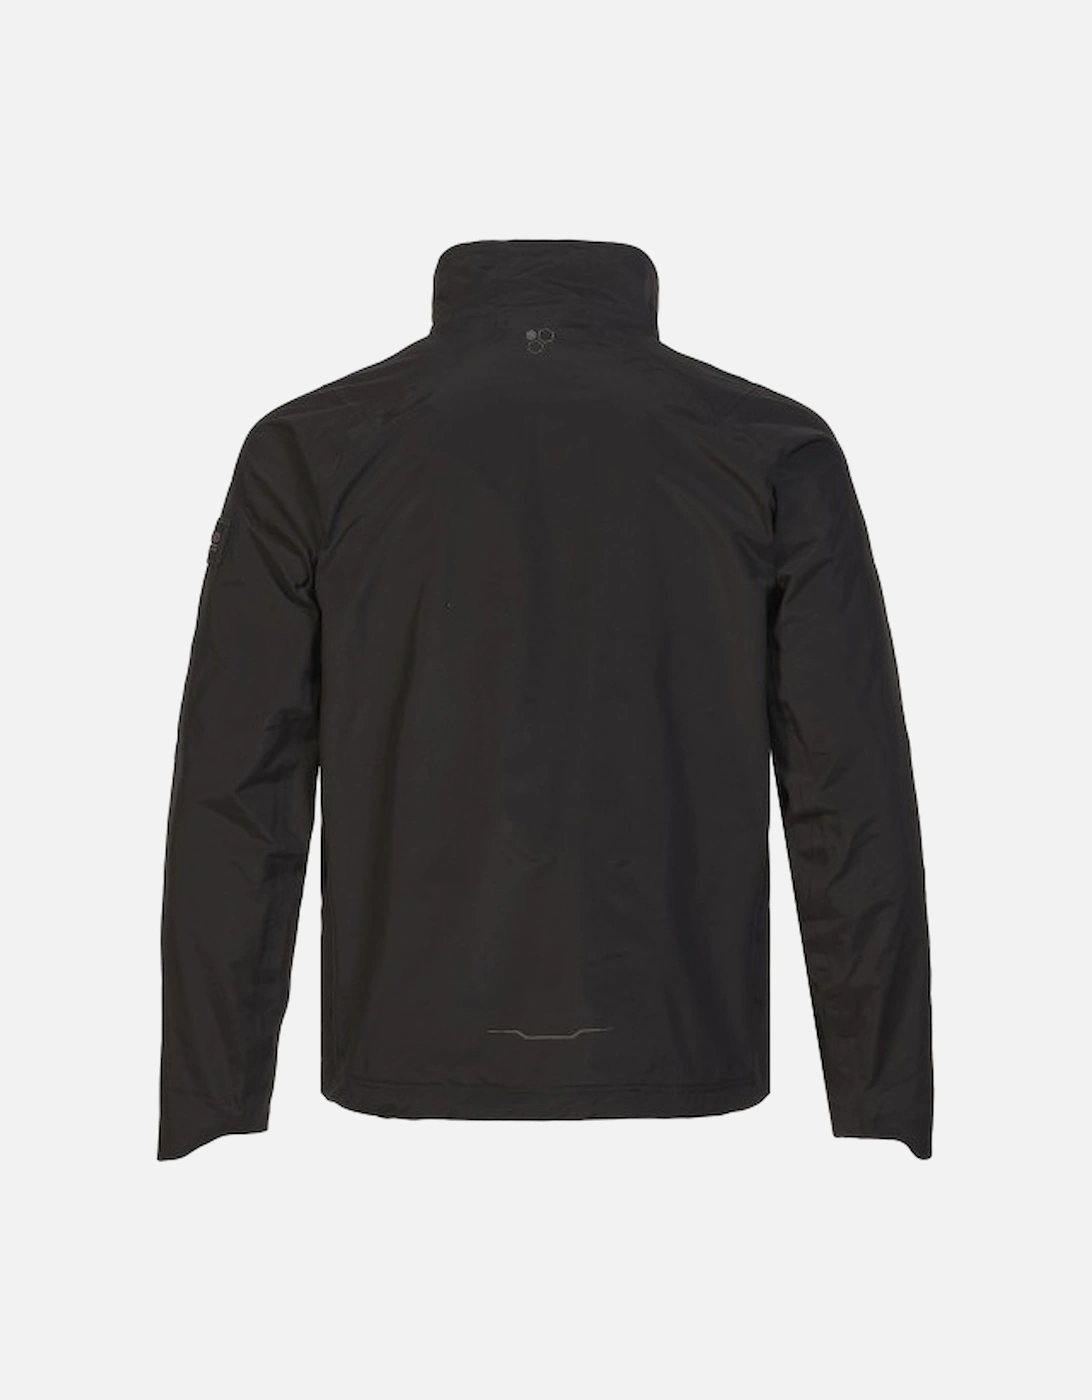 Men's Tech Snug Jacket Black